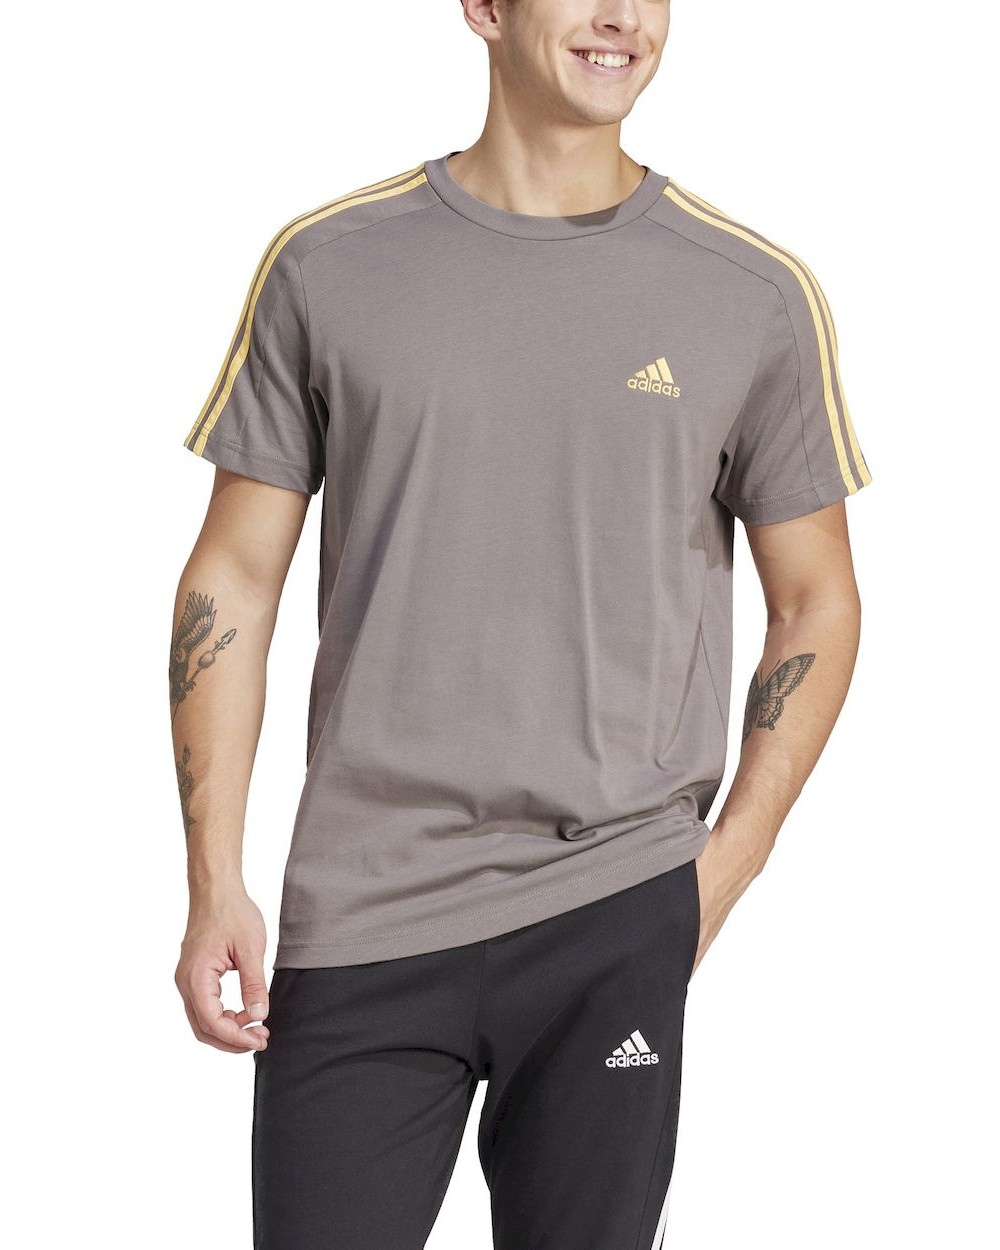  T-shirt tempo libero UOMO Adidas Grigio Giallo Essentials 3-Stripes